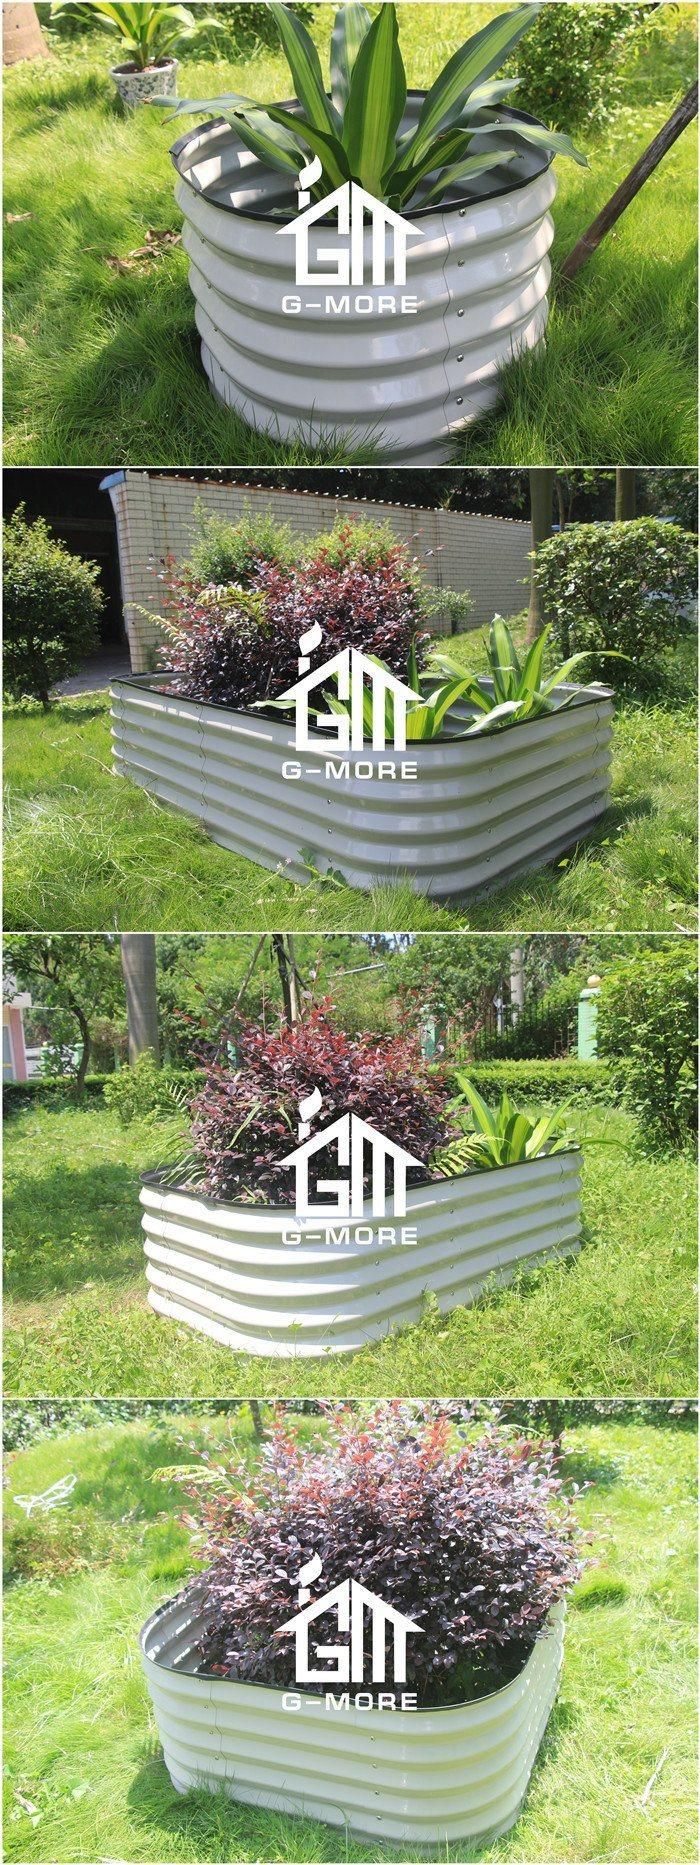 Outdoor Galvanized Steel Oval Raised Garden Beds for Vegetables Flowers Herbs Growing Raised Garden Beds